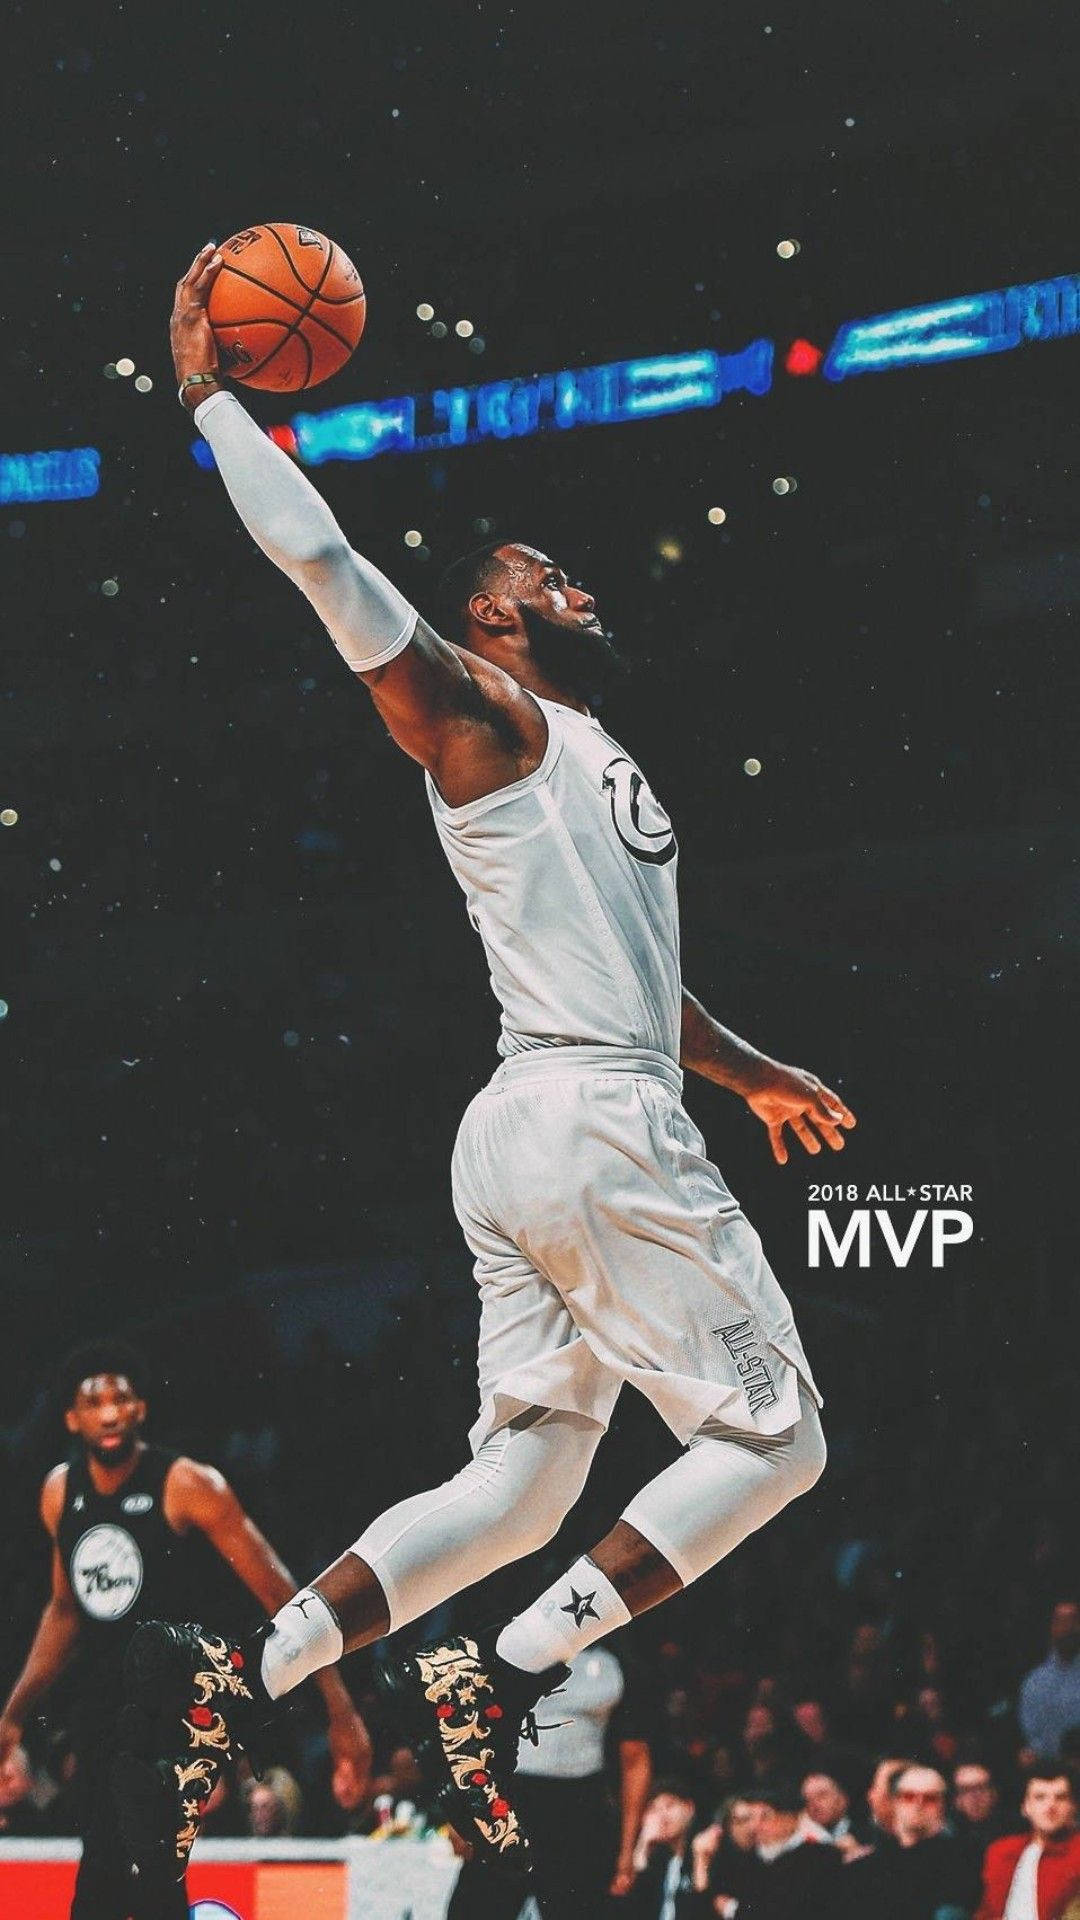 Lebron James slams in the 2018 NBA All Star MVP Dunk Wallpaper